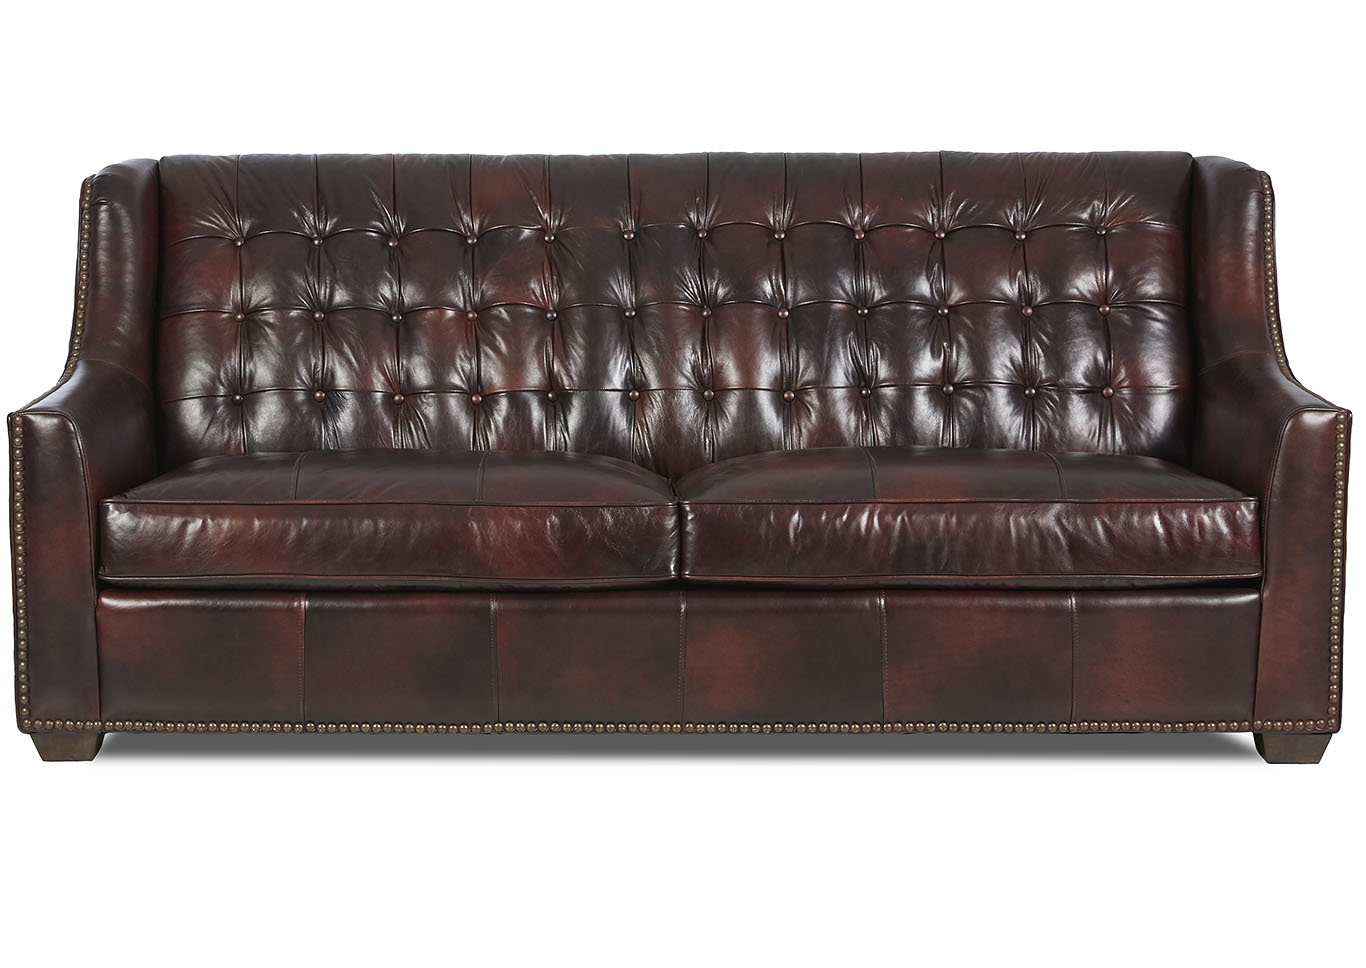 Pennington Chestnut Brown Leather Stationary Sofa,Klaussner Home Furnishings